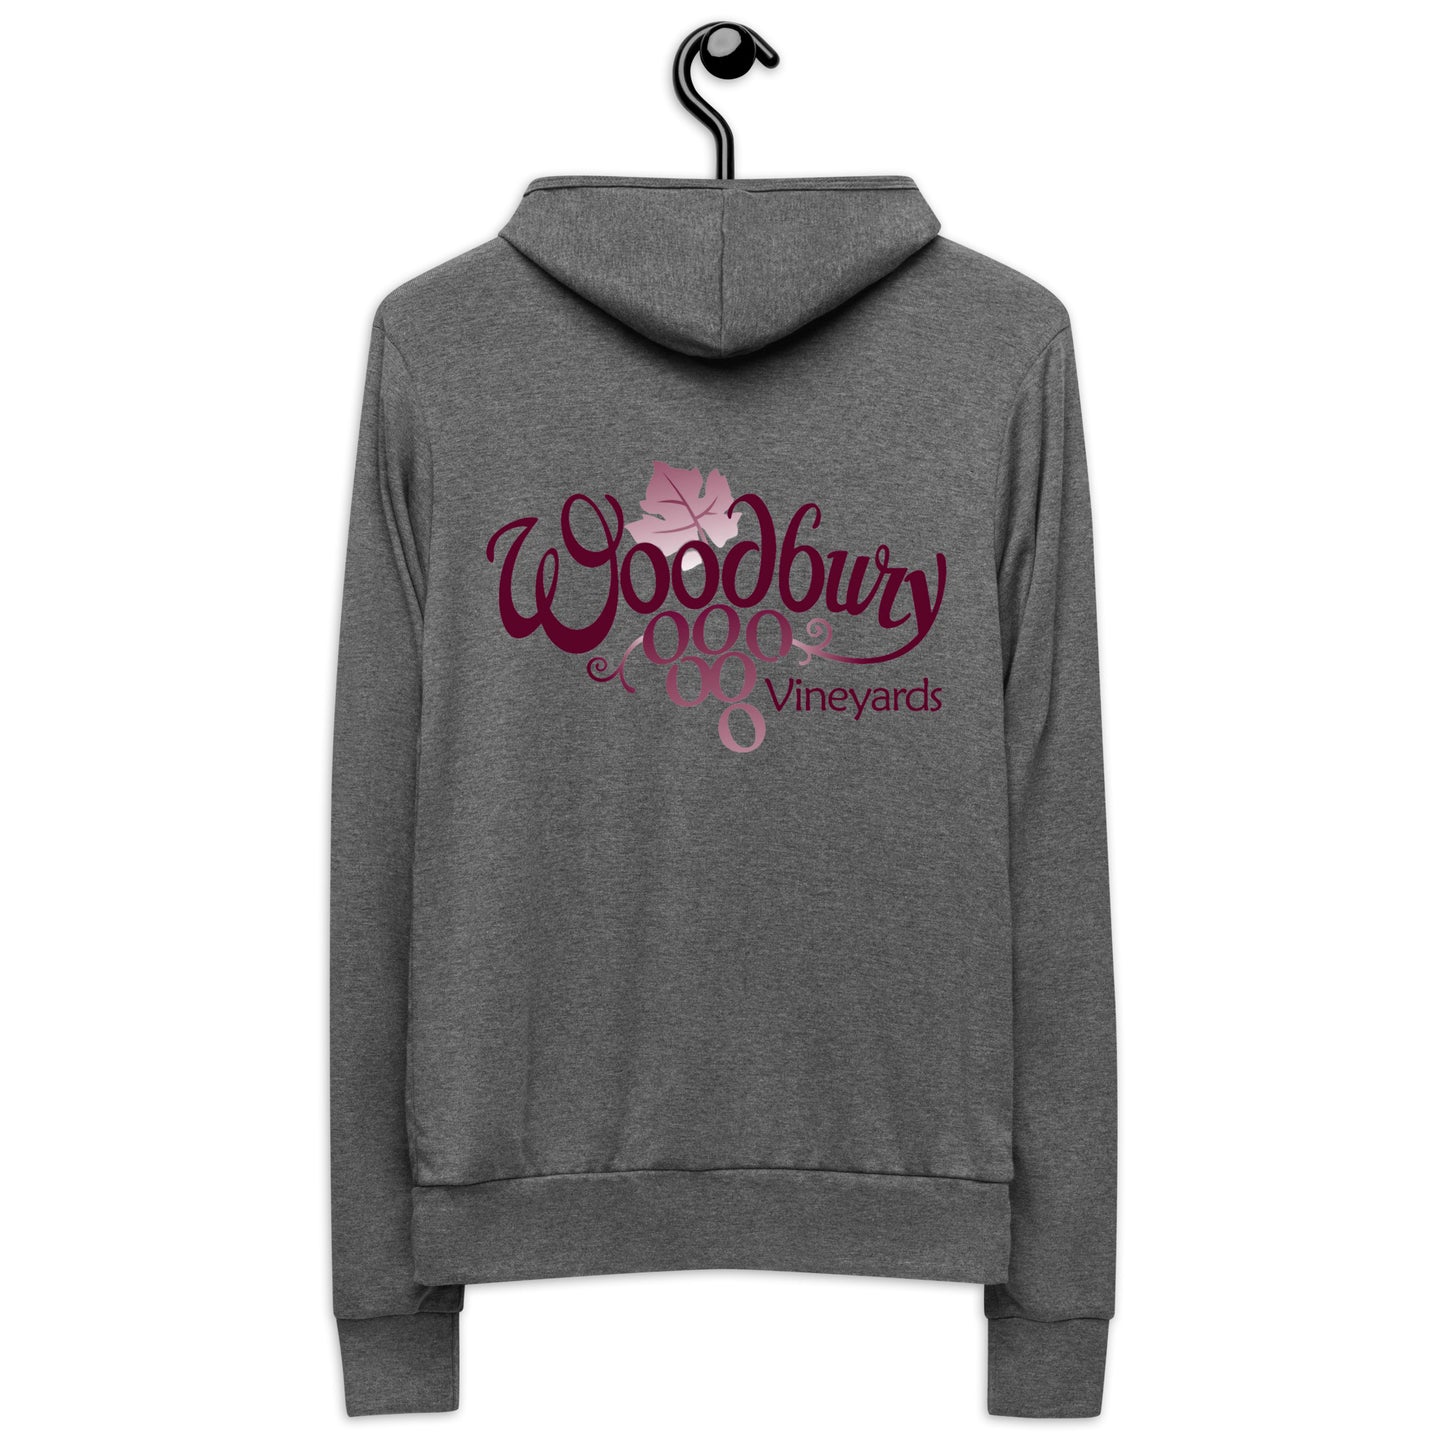 Woodbury Vineyards Unisex Zip-up Hooded Sweatshirt